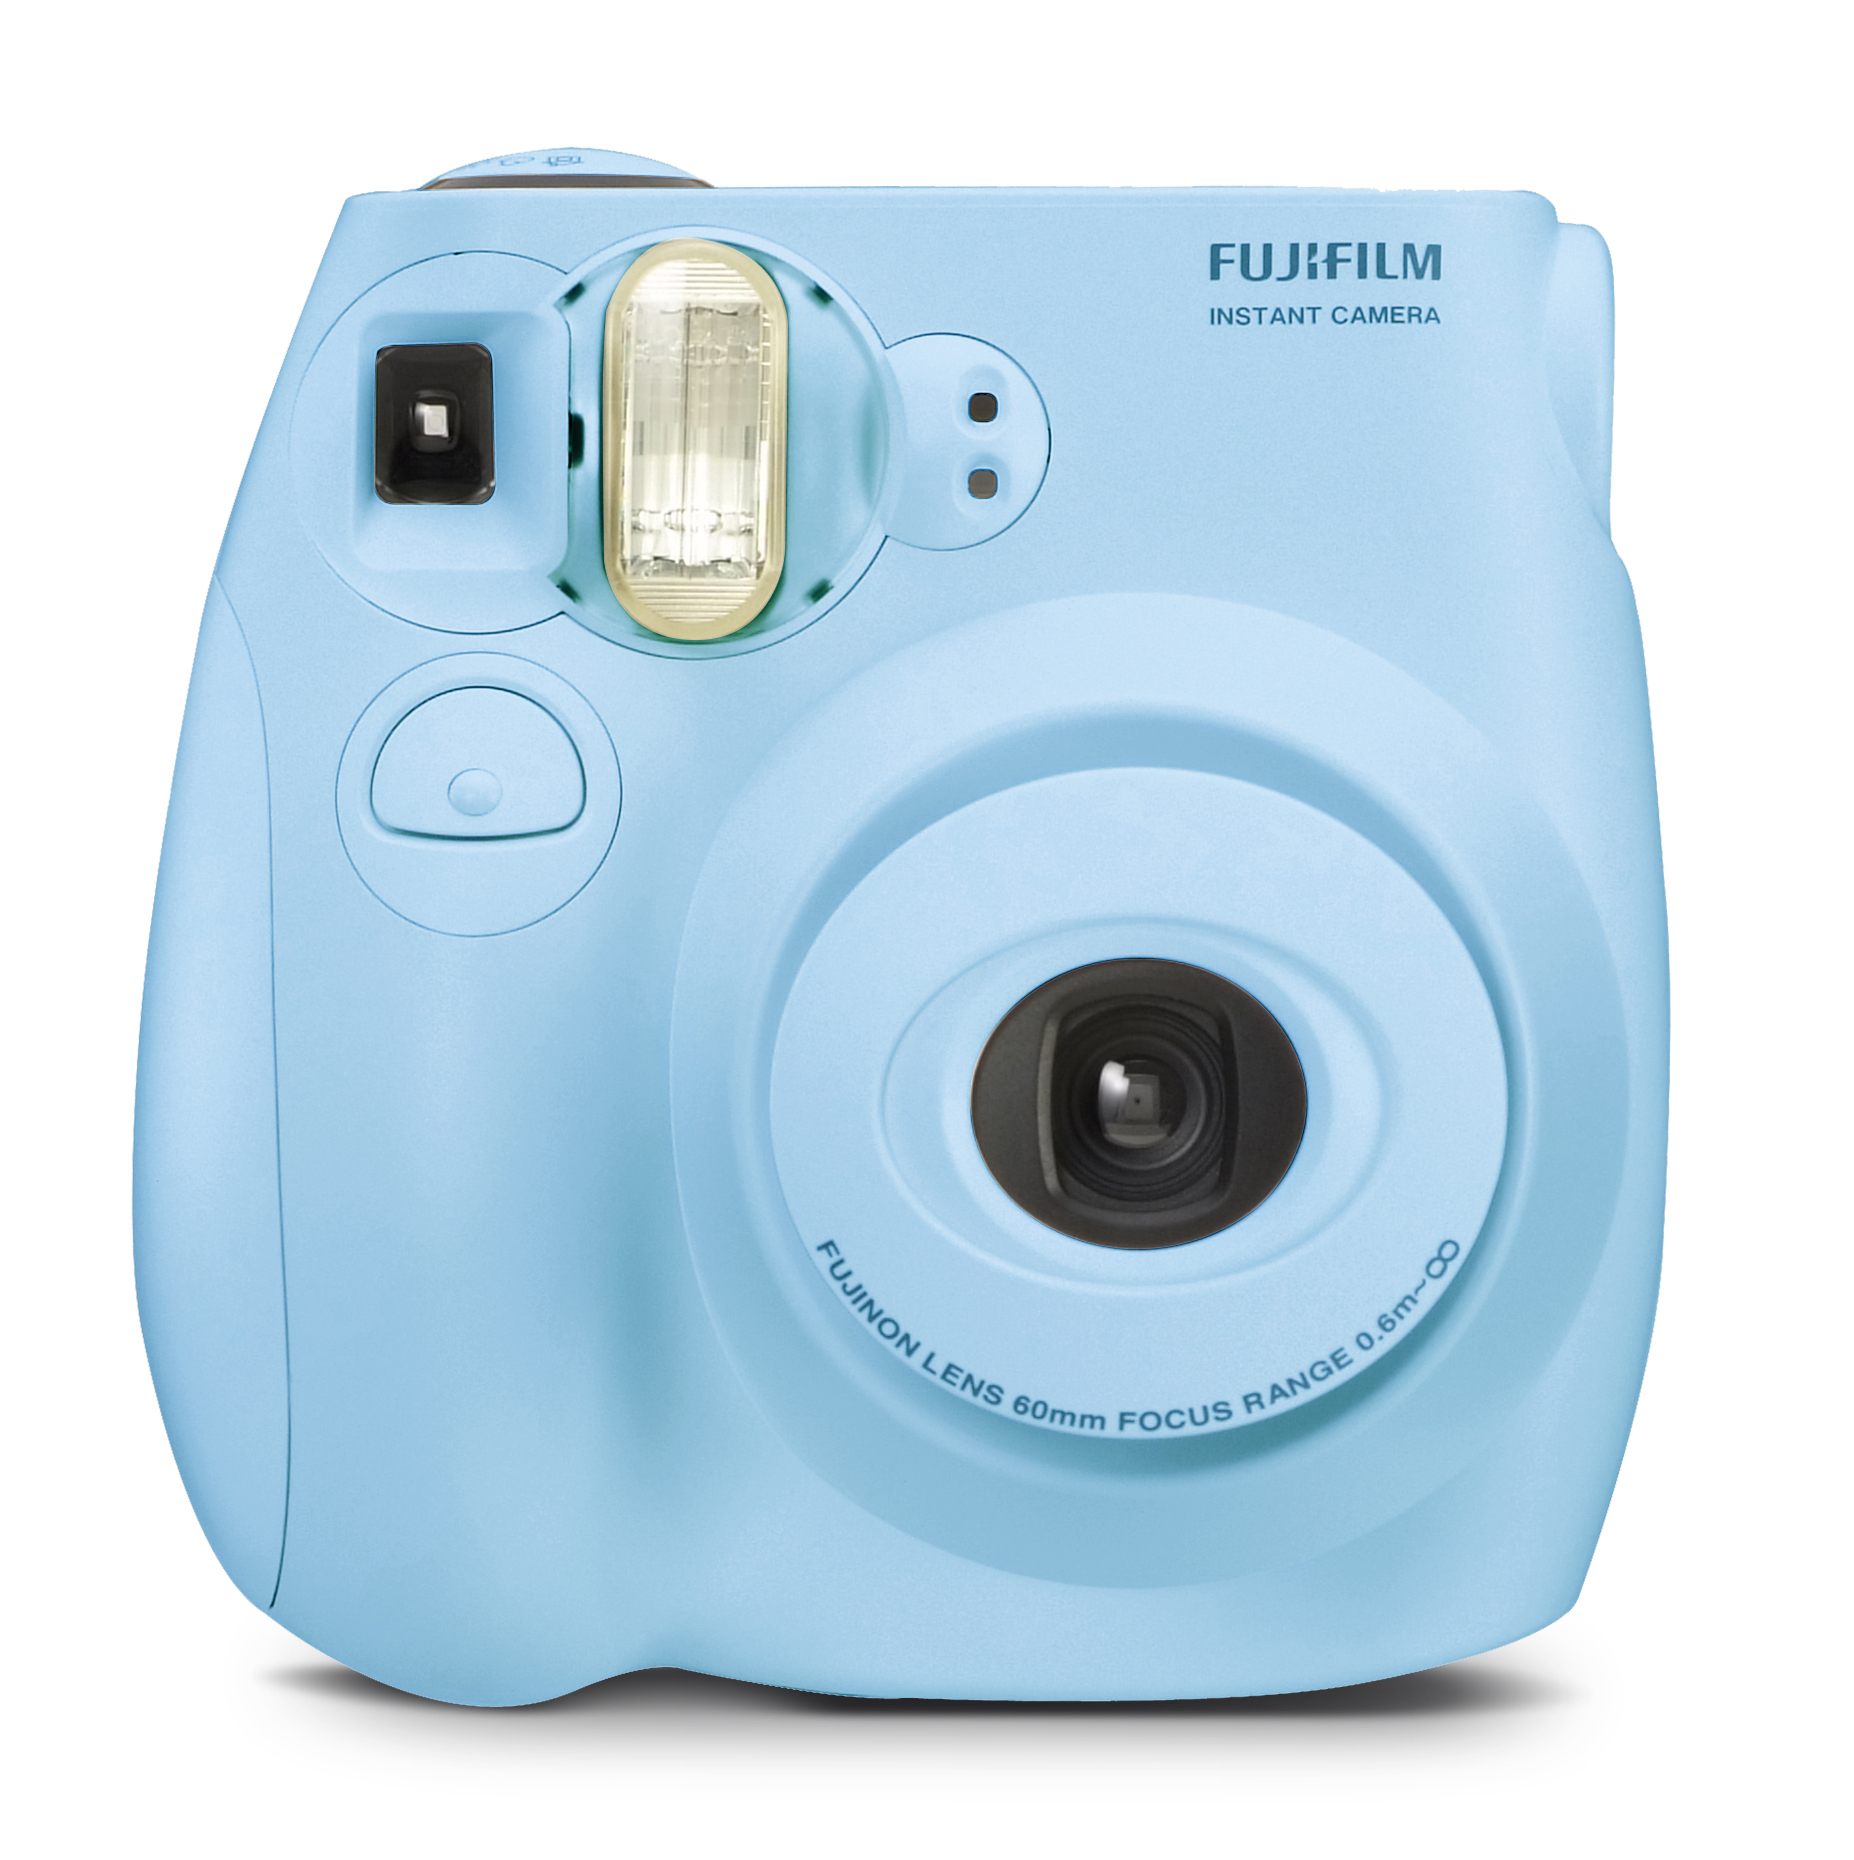 Fujifilm Instax Mini 7s Instant Camera w/ Matching Case, Film, Photo Album & Photo Holders - Light Blue - image 2 of 2